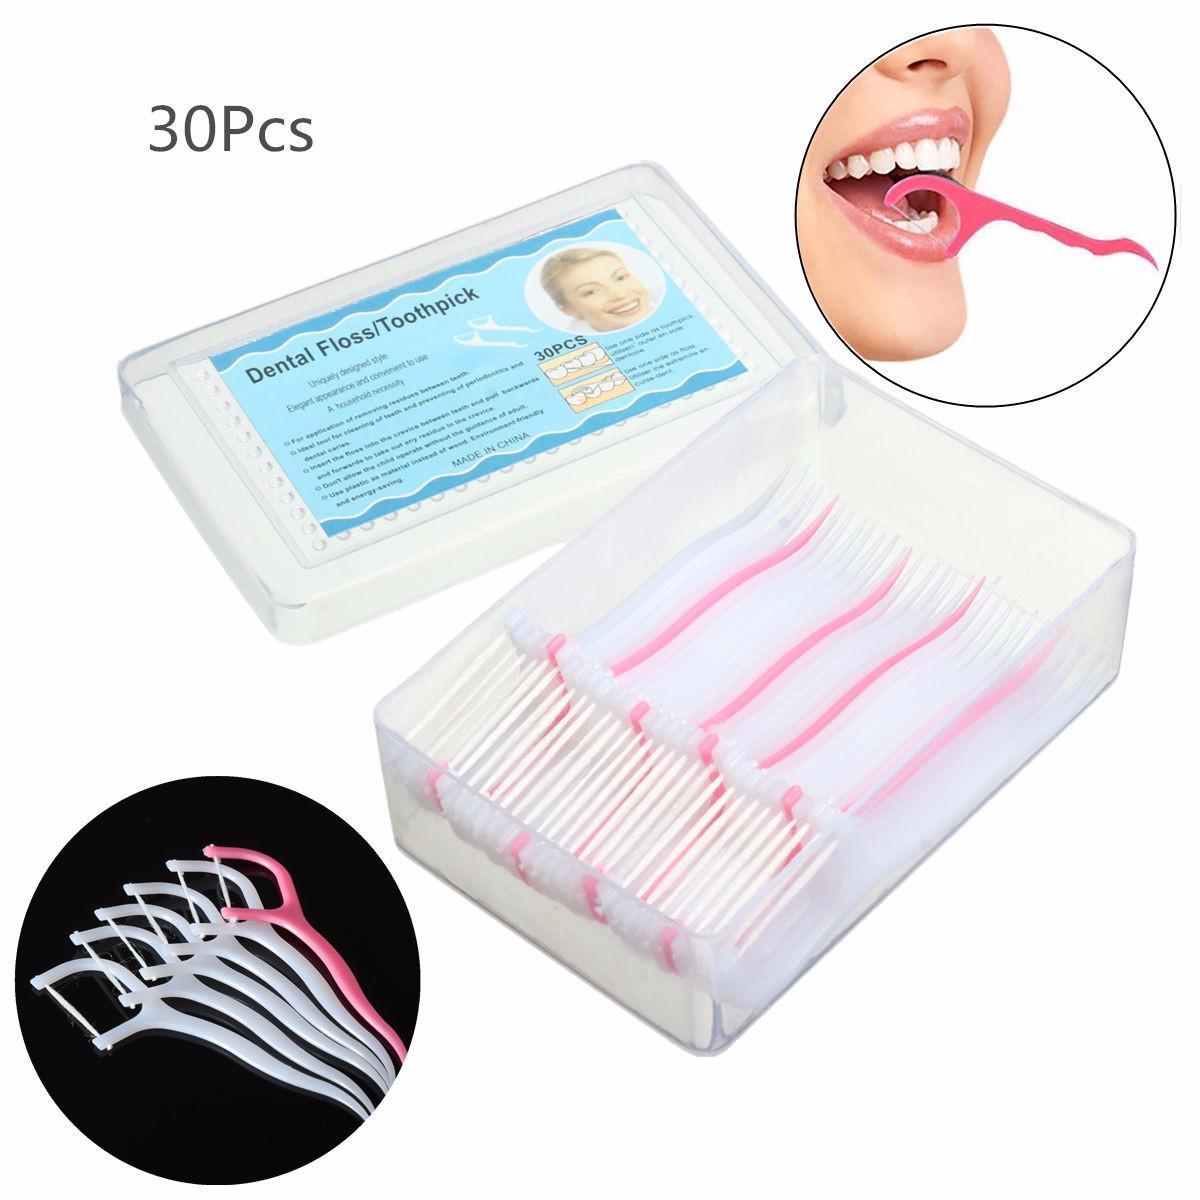 20 Pcs Dental Floss Sticks & Tooth Picks Teeth Plaque Remover Interdental 2 in 1